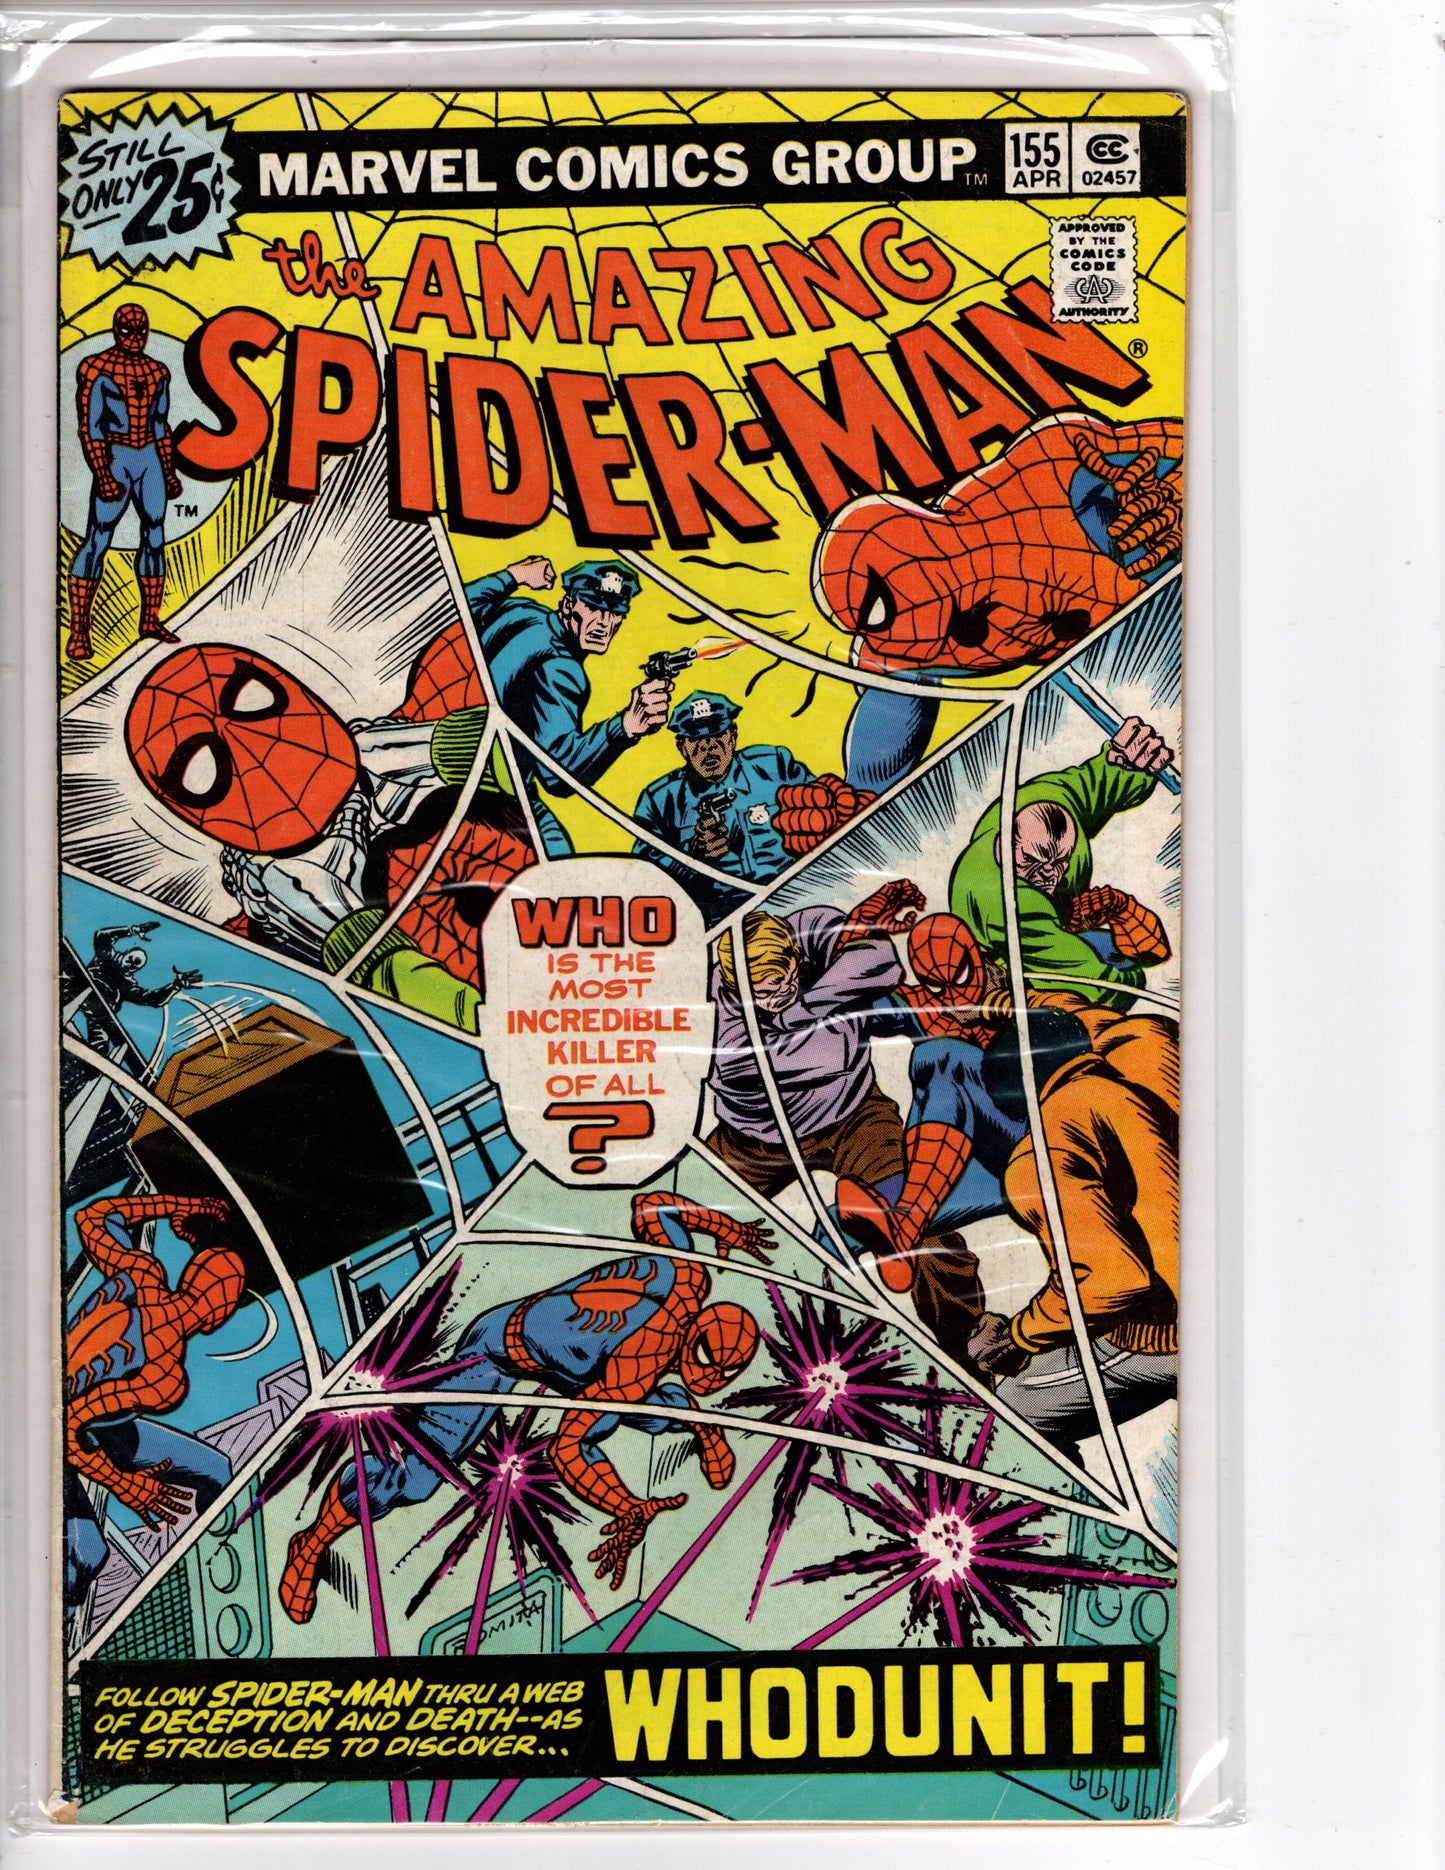 The Amazing Spider-Man #155